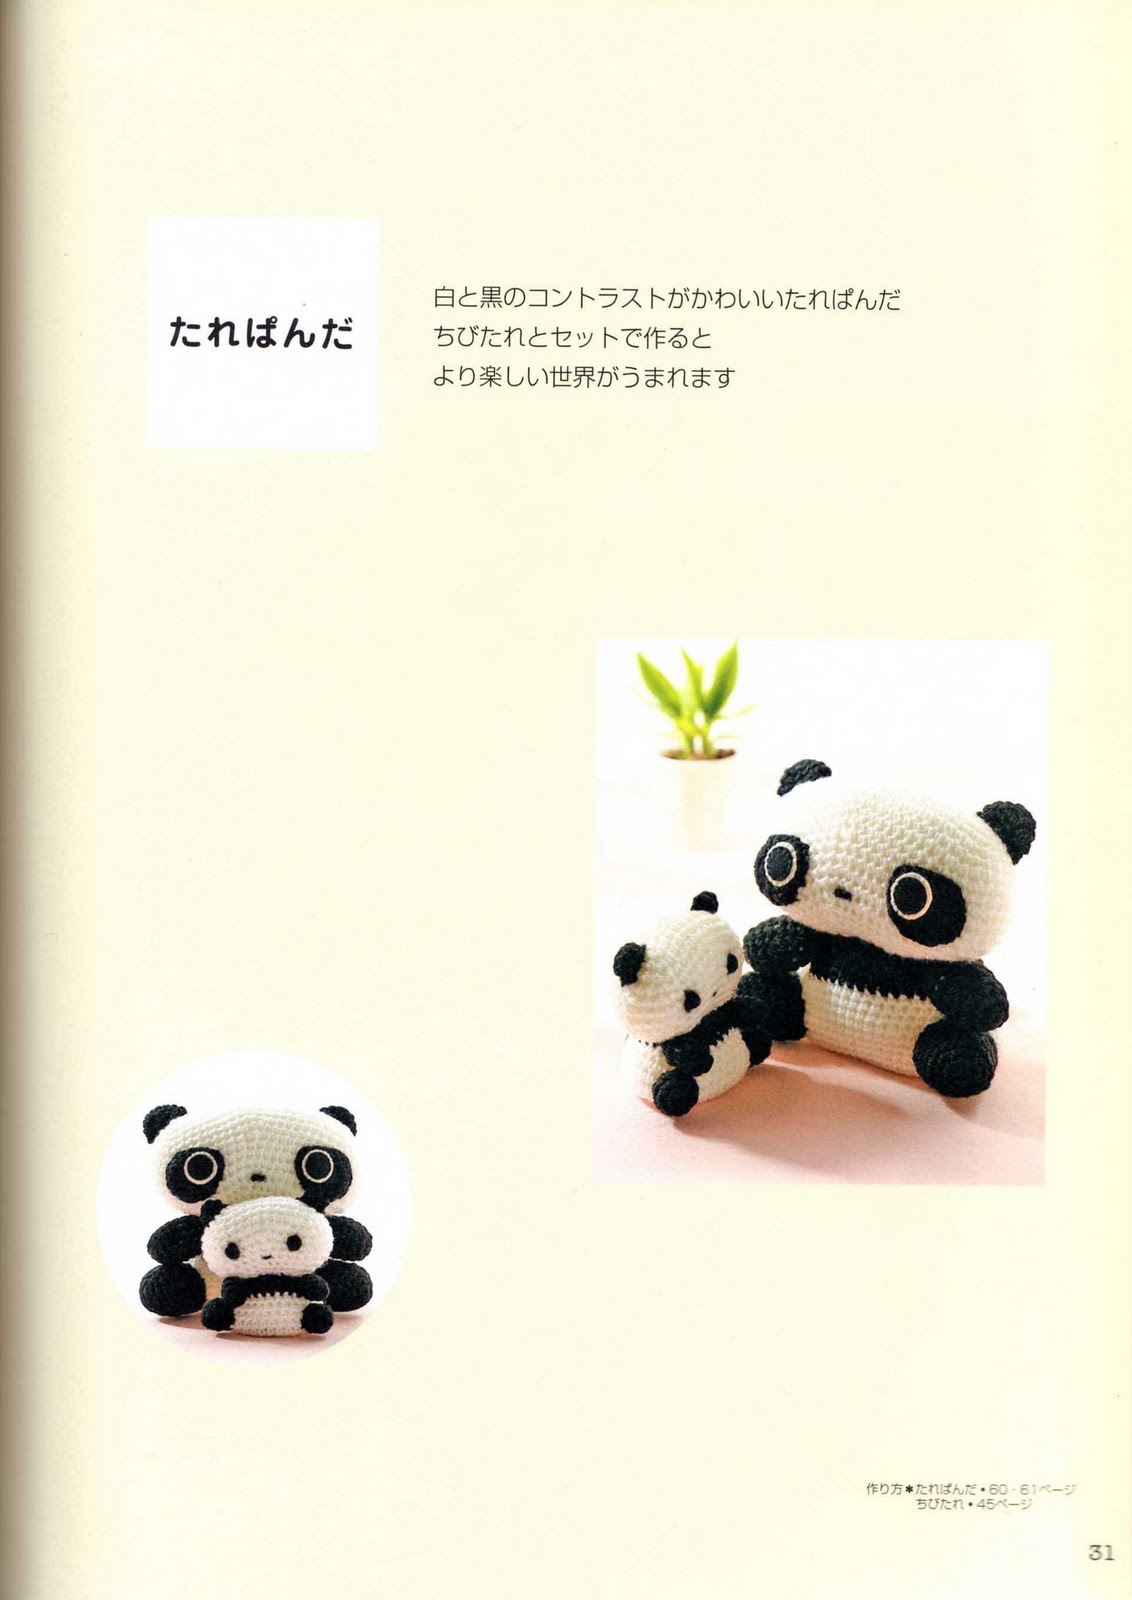 Big panda amigurumi pattern (1)